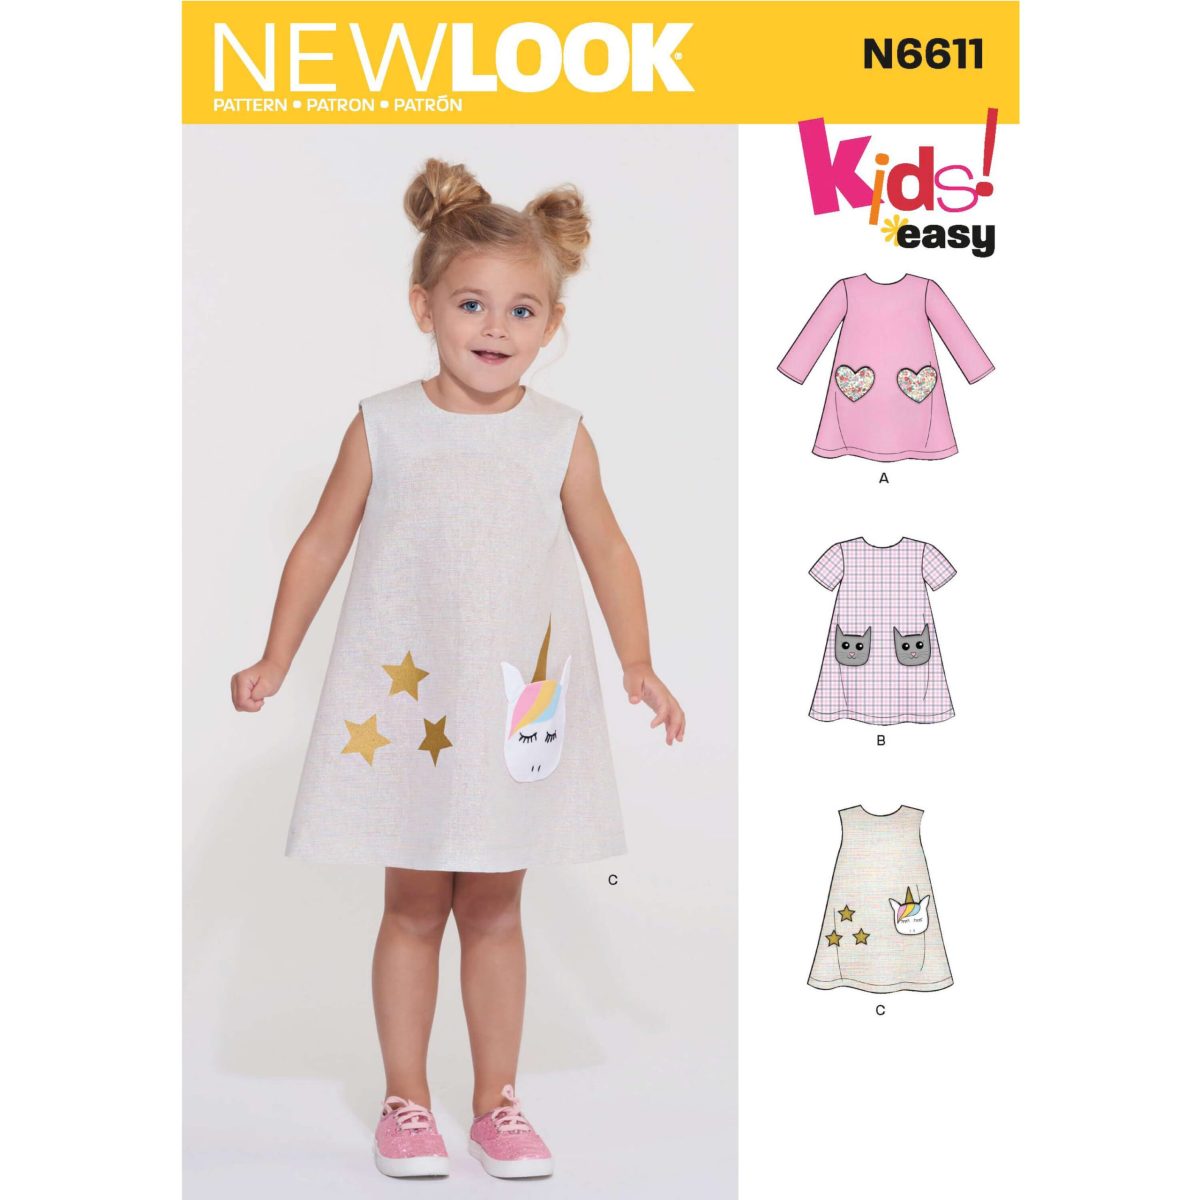 New Look Pattern N6611 Children's Novelty Dress